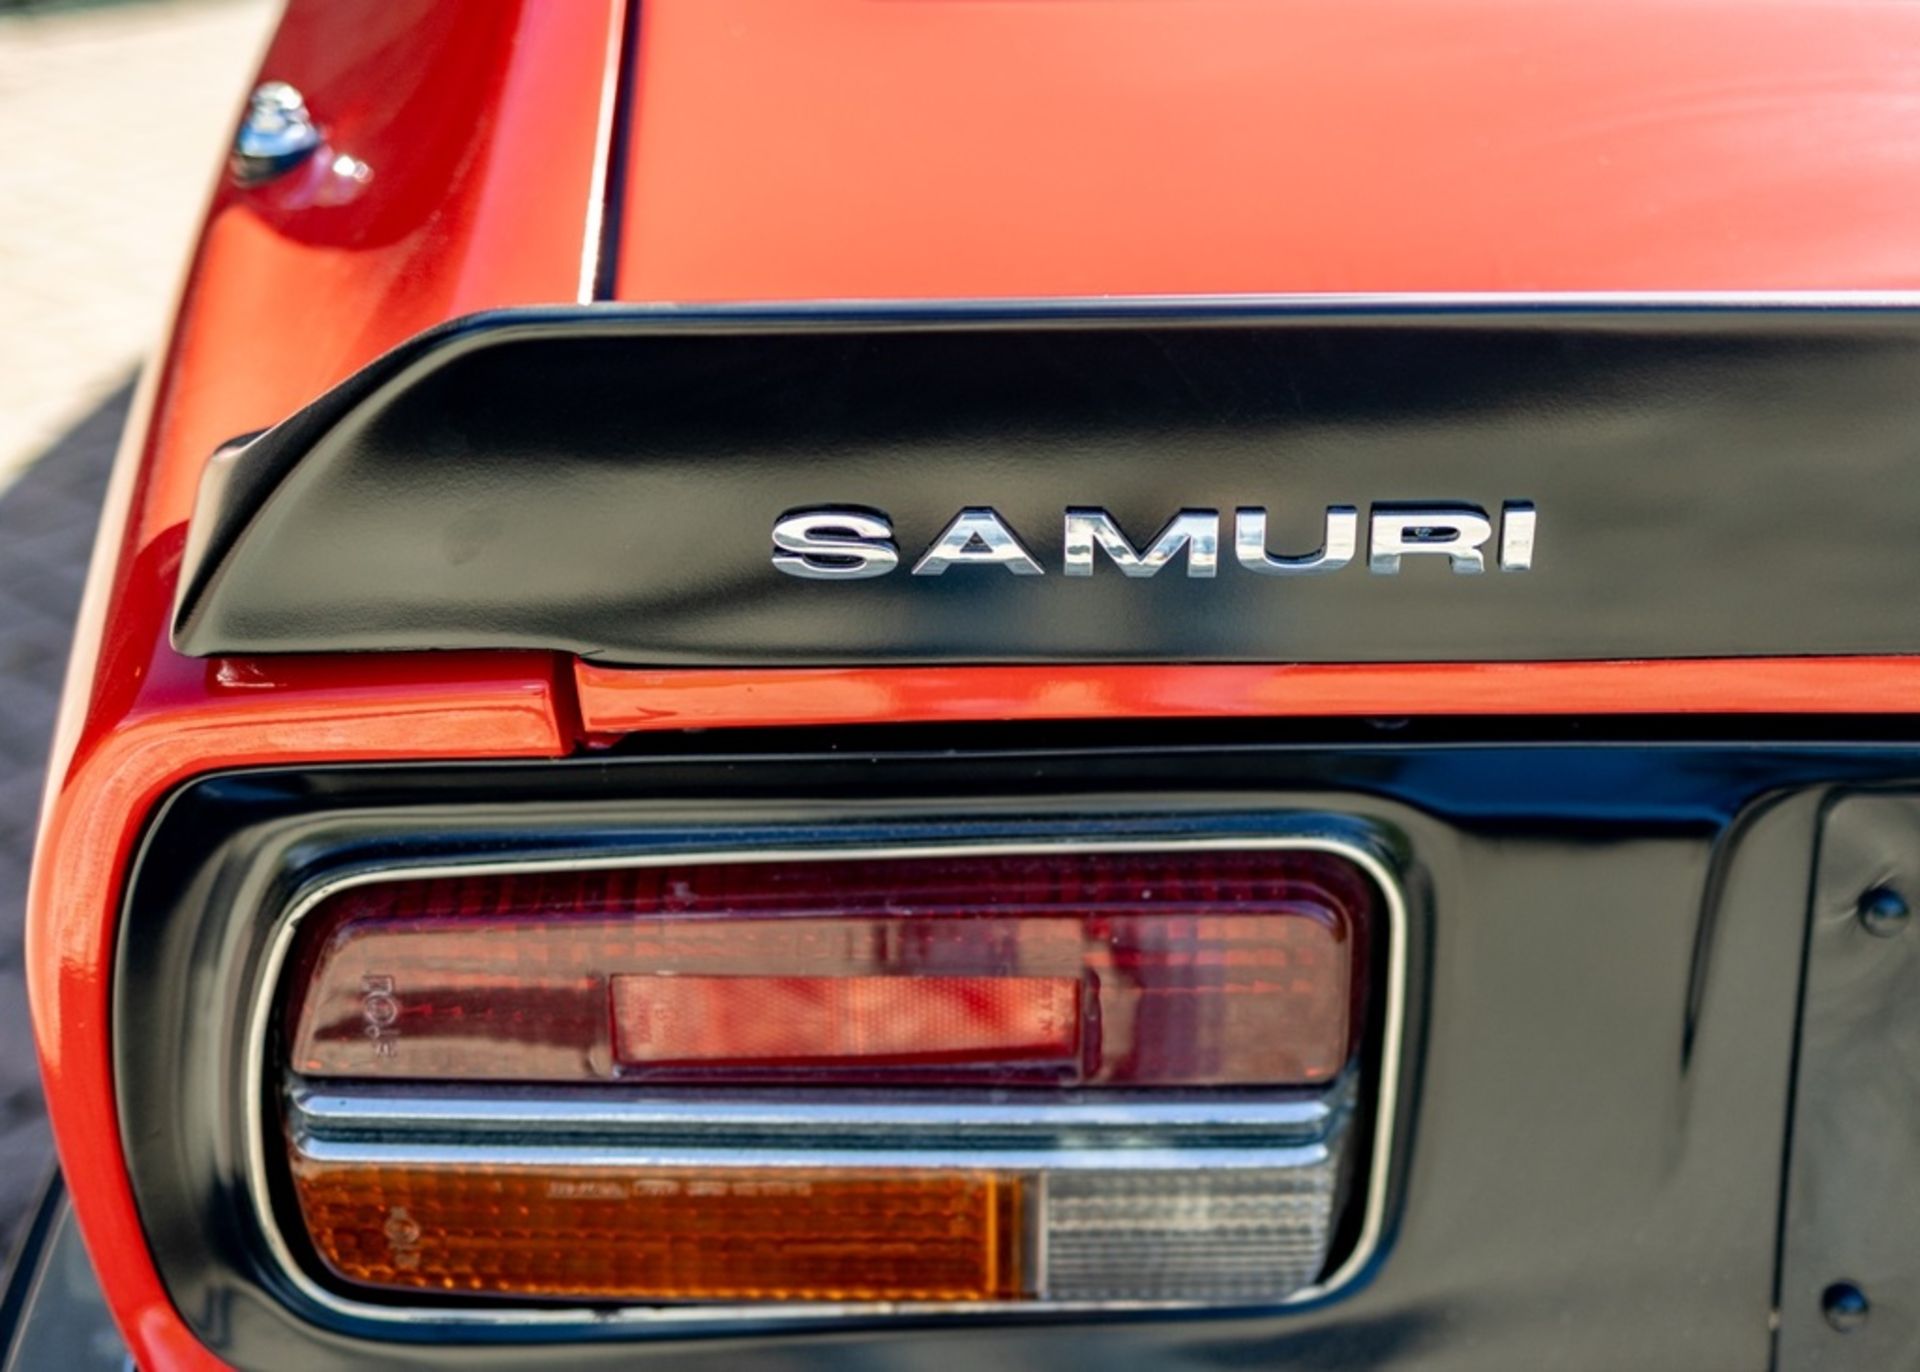 1973 Datsun 240Z Samuri - Image 12 of 31